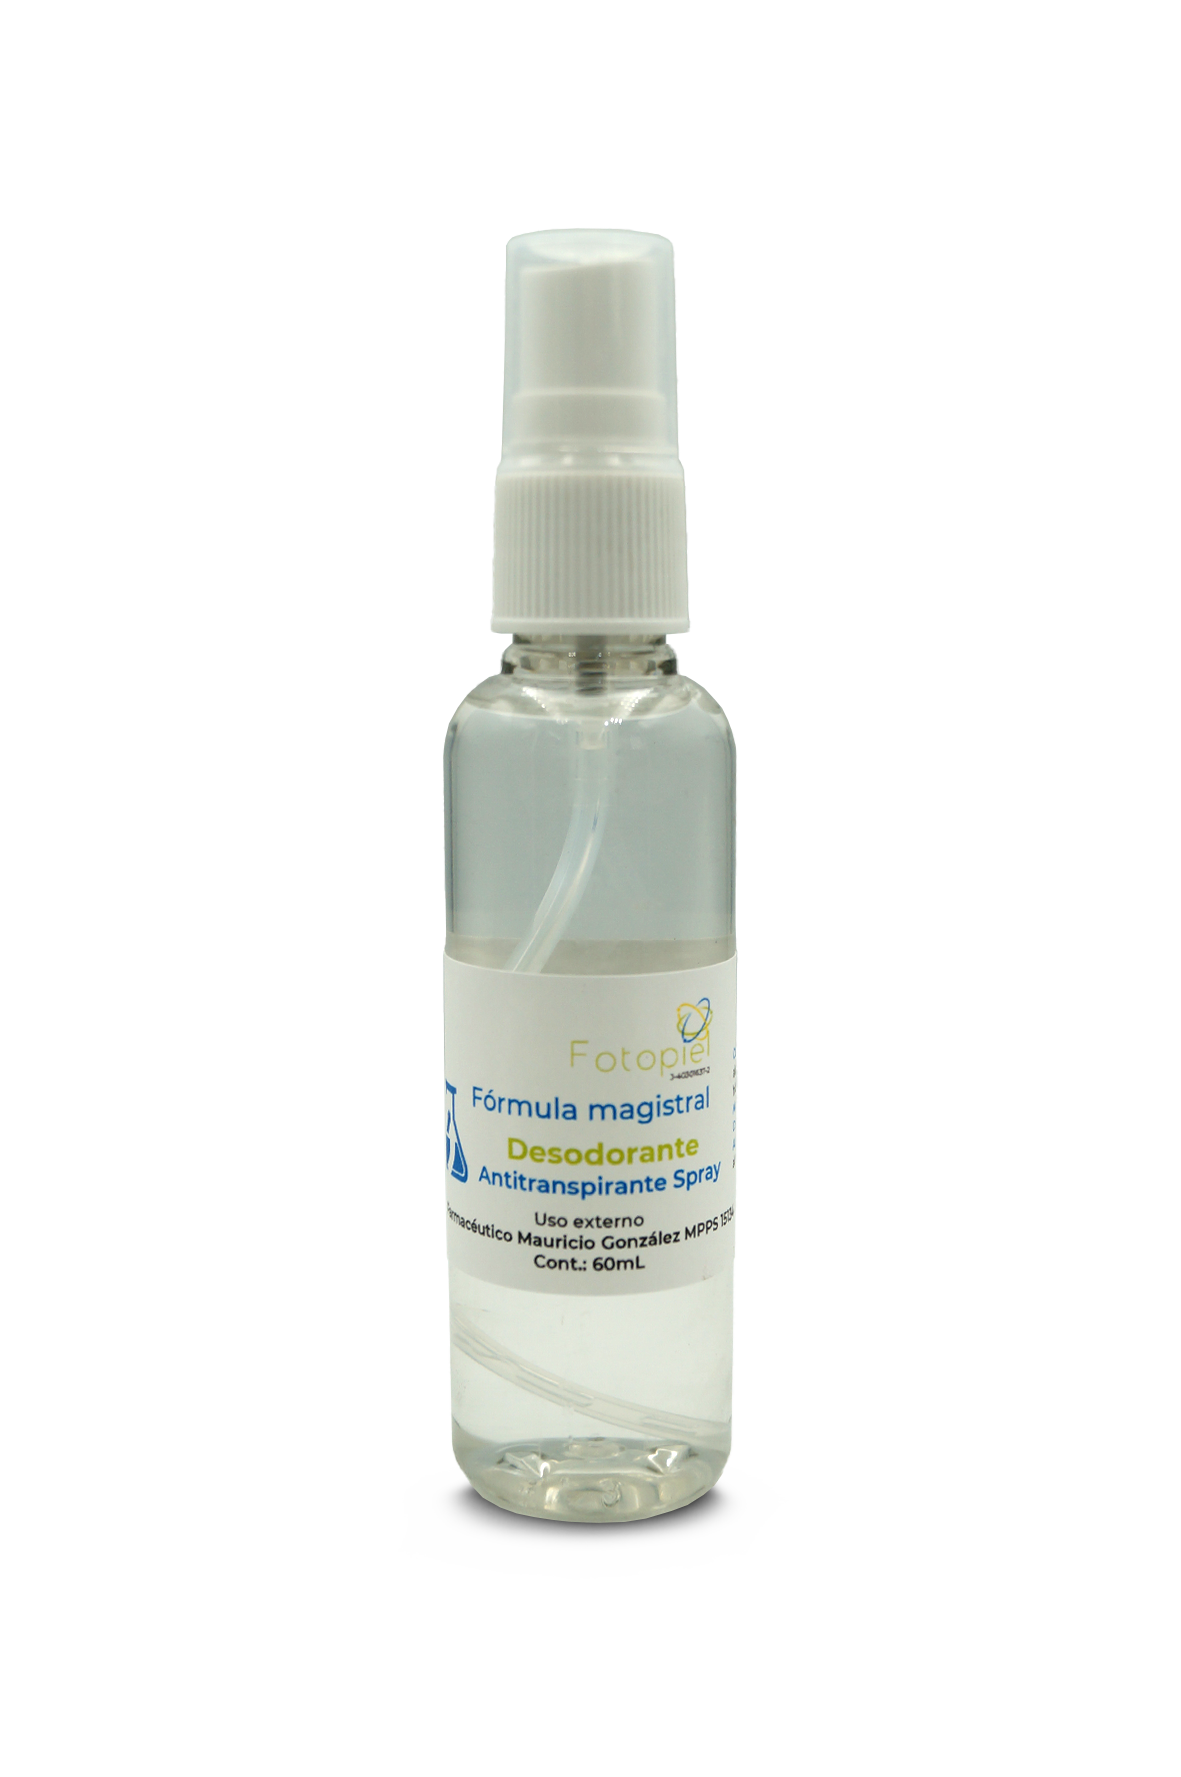 Fórmula magistral desodorante antitranspirante